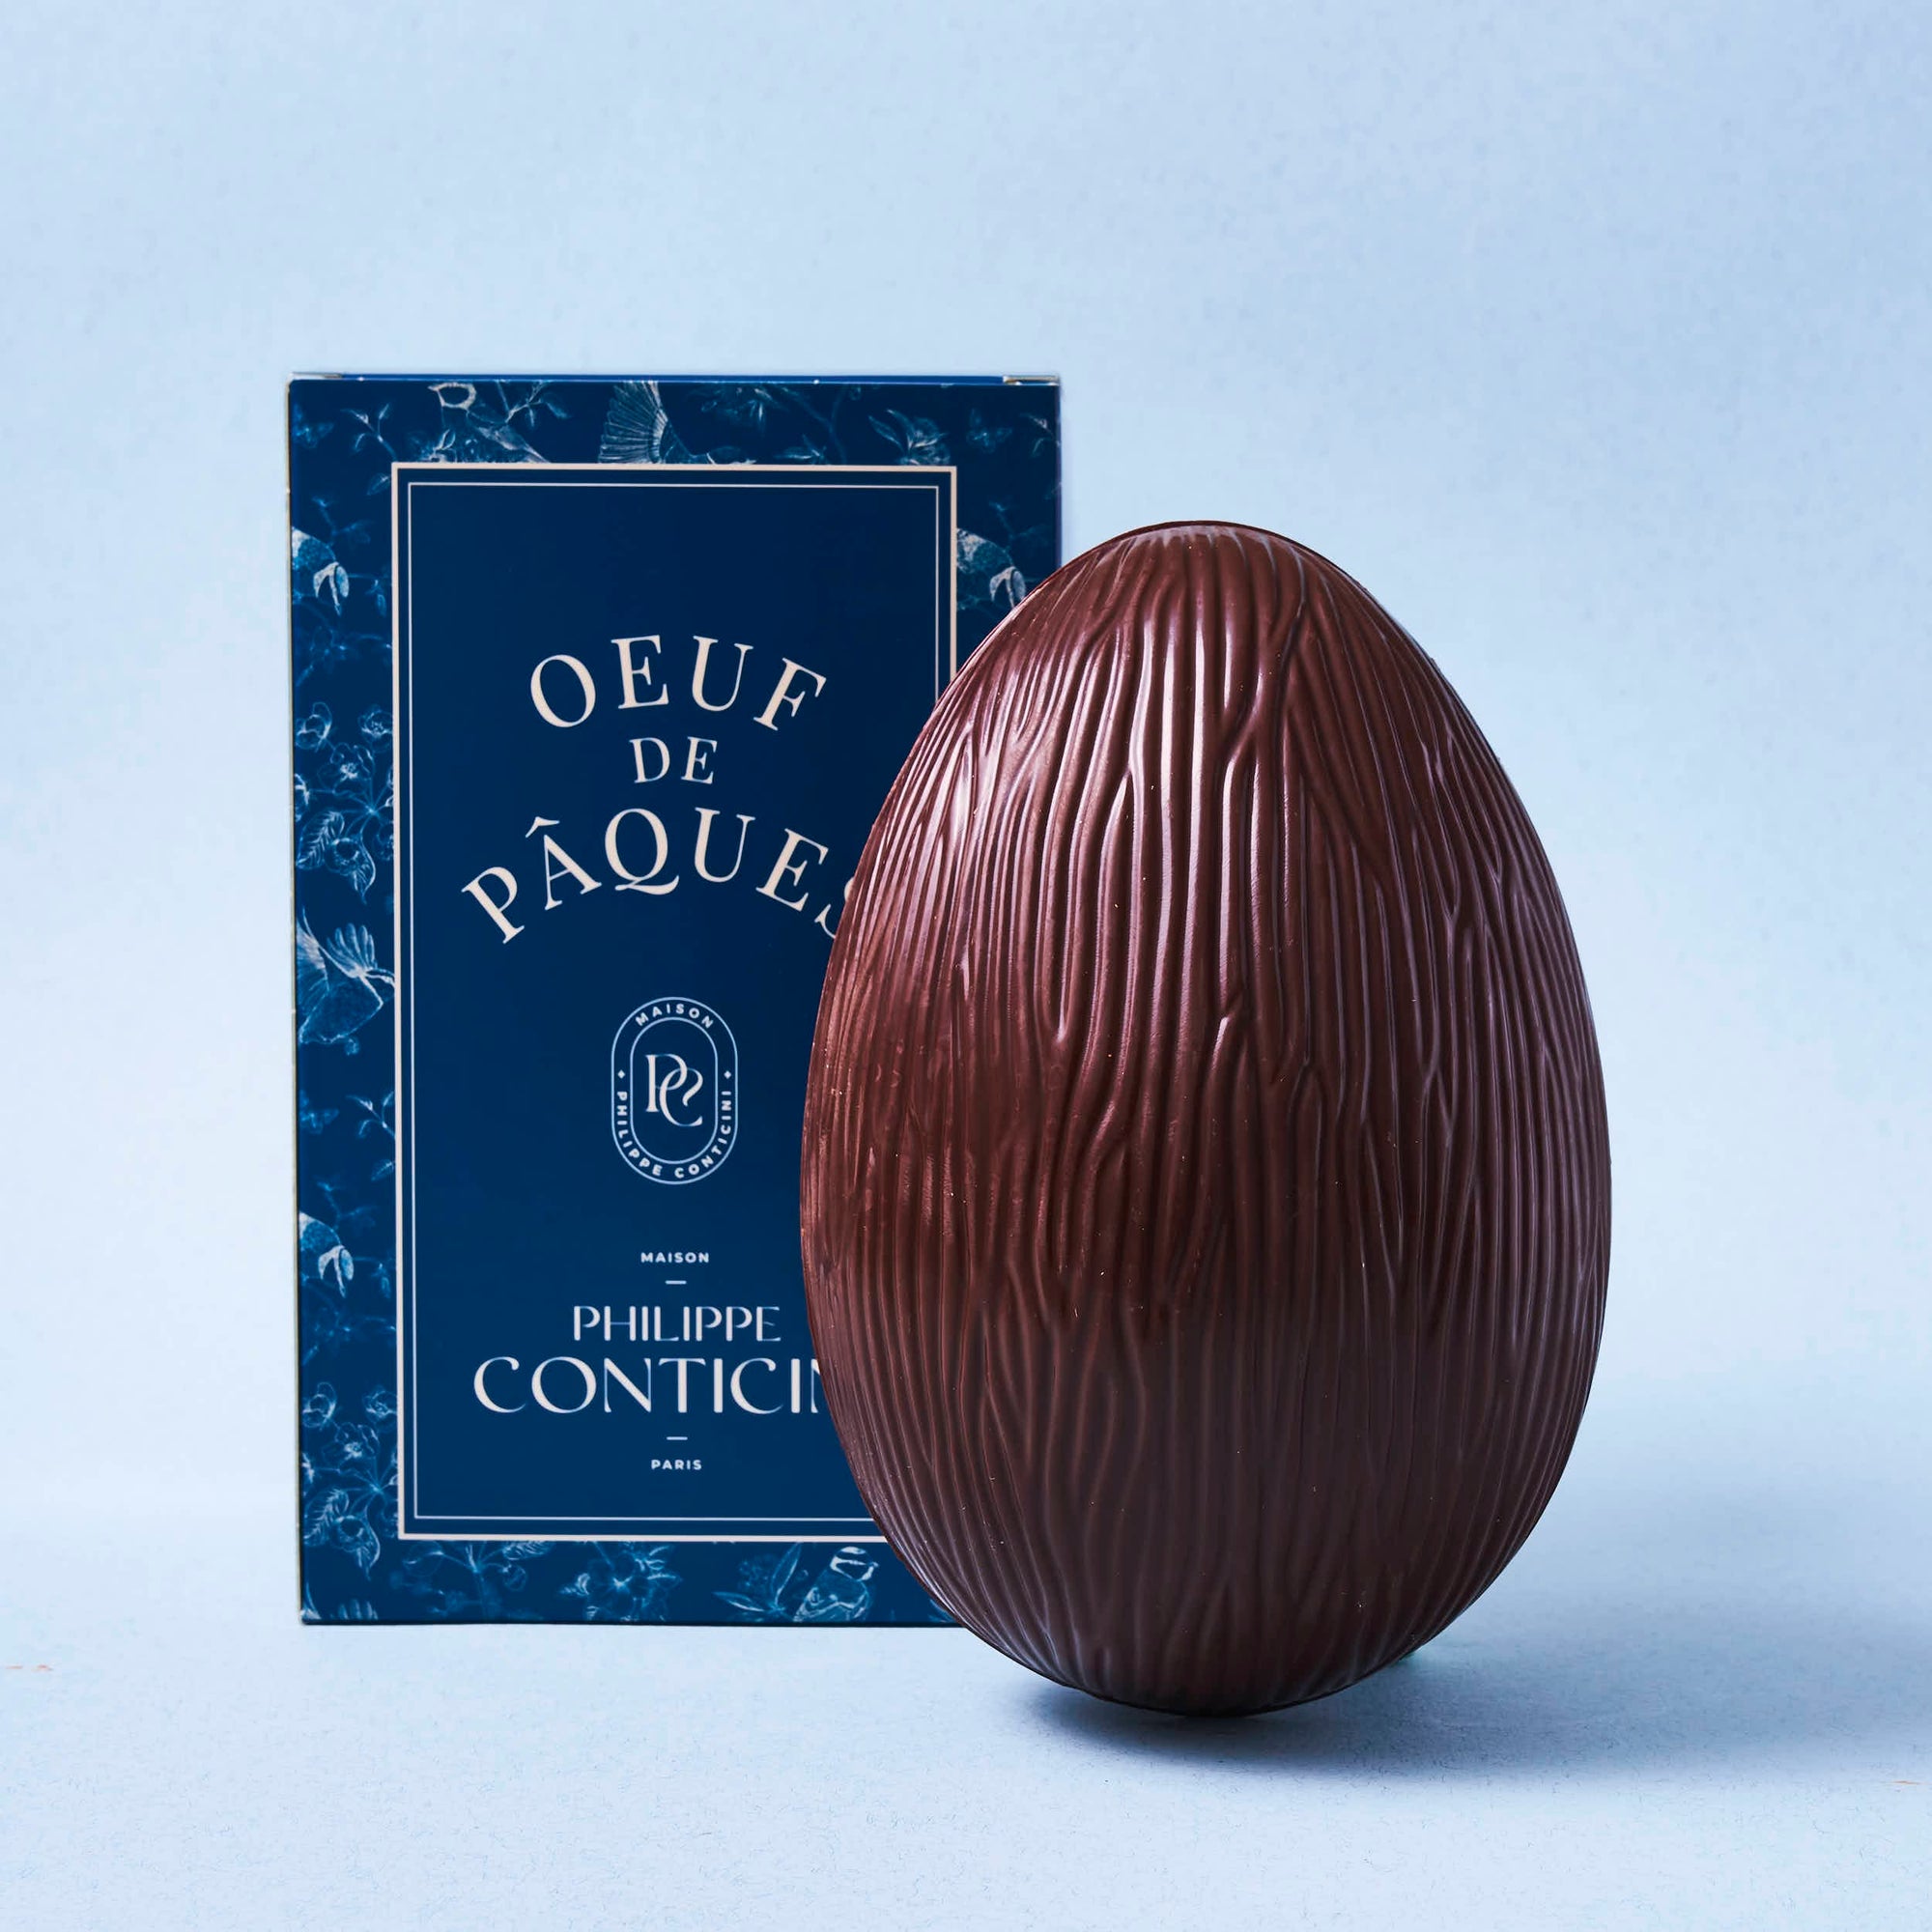 Easter egg - dark chocolate